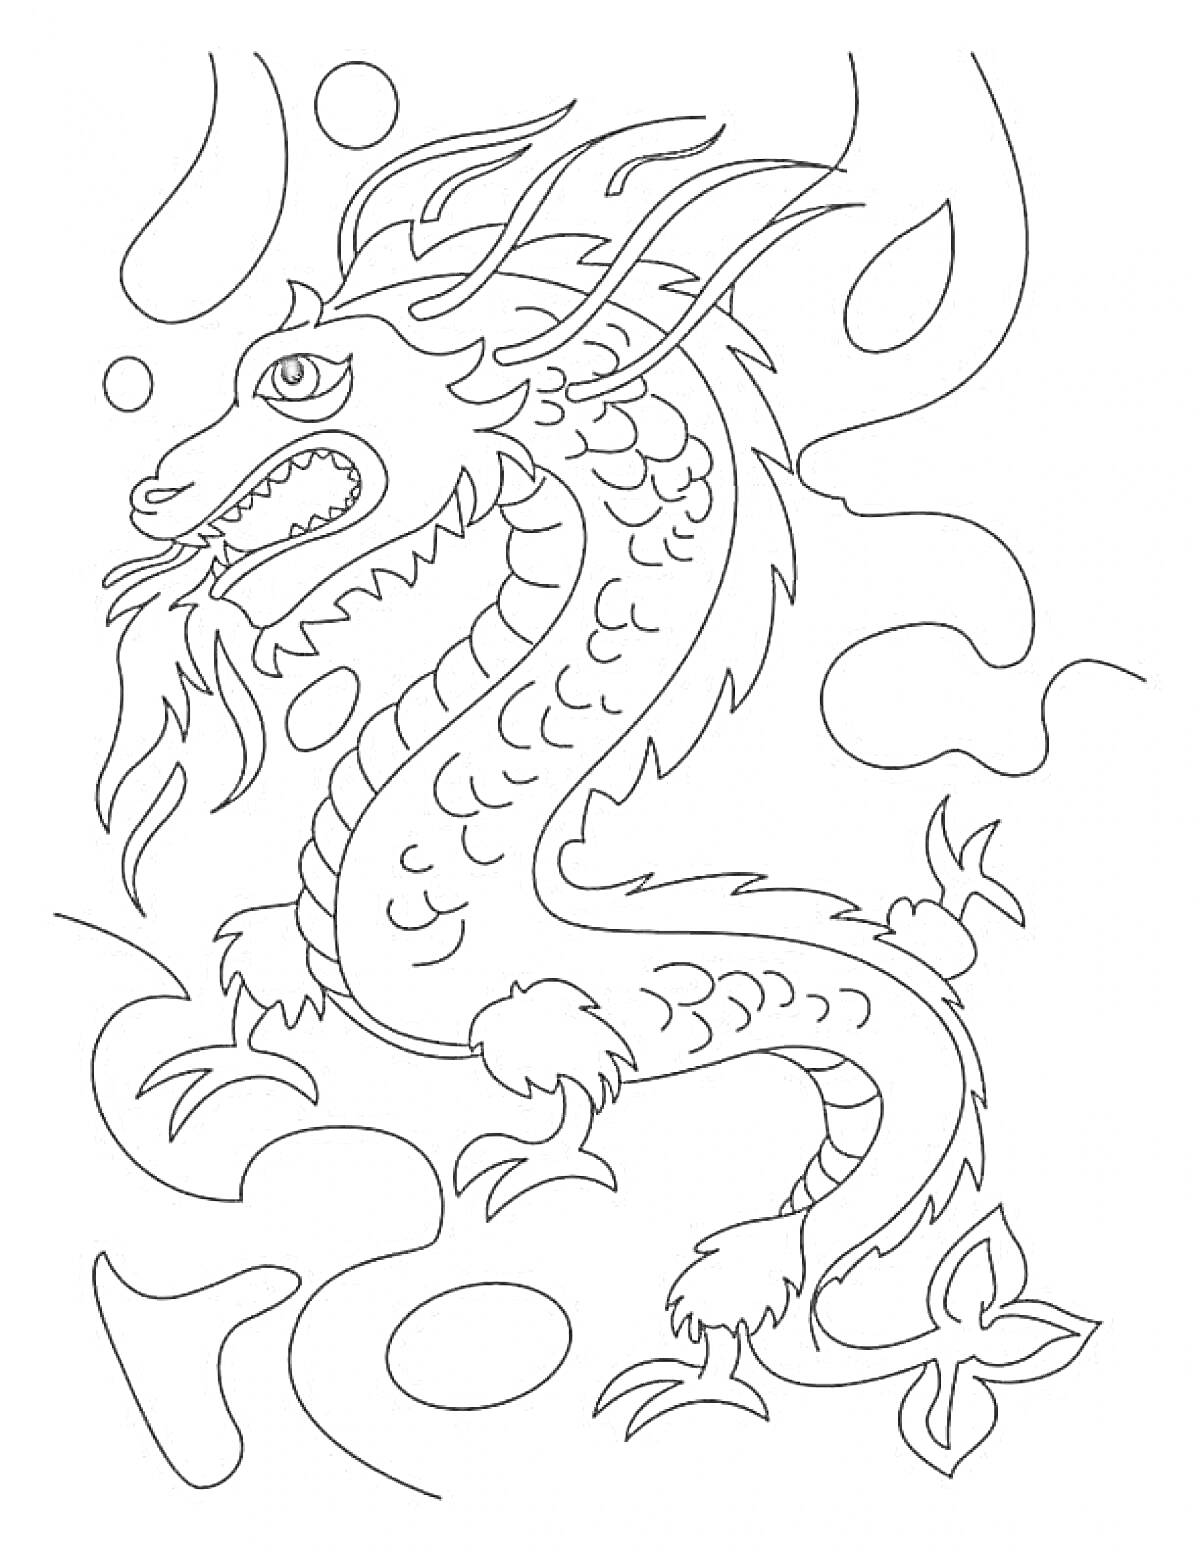 Раскраска Китайский дракон с узорами и завитками